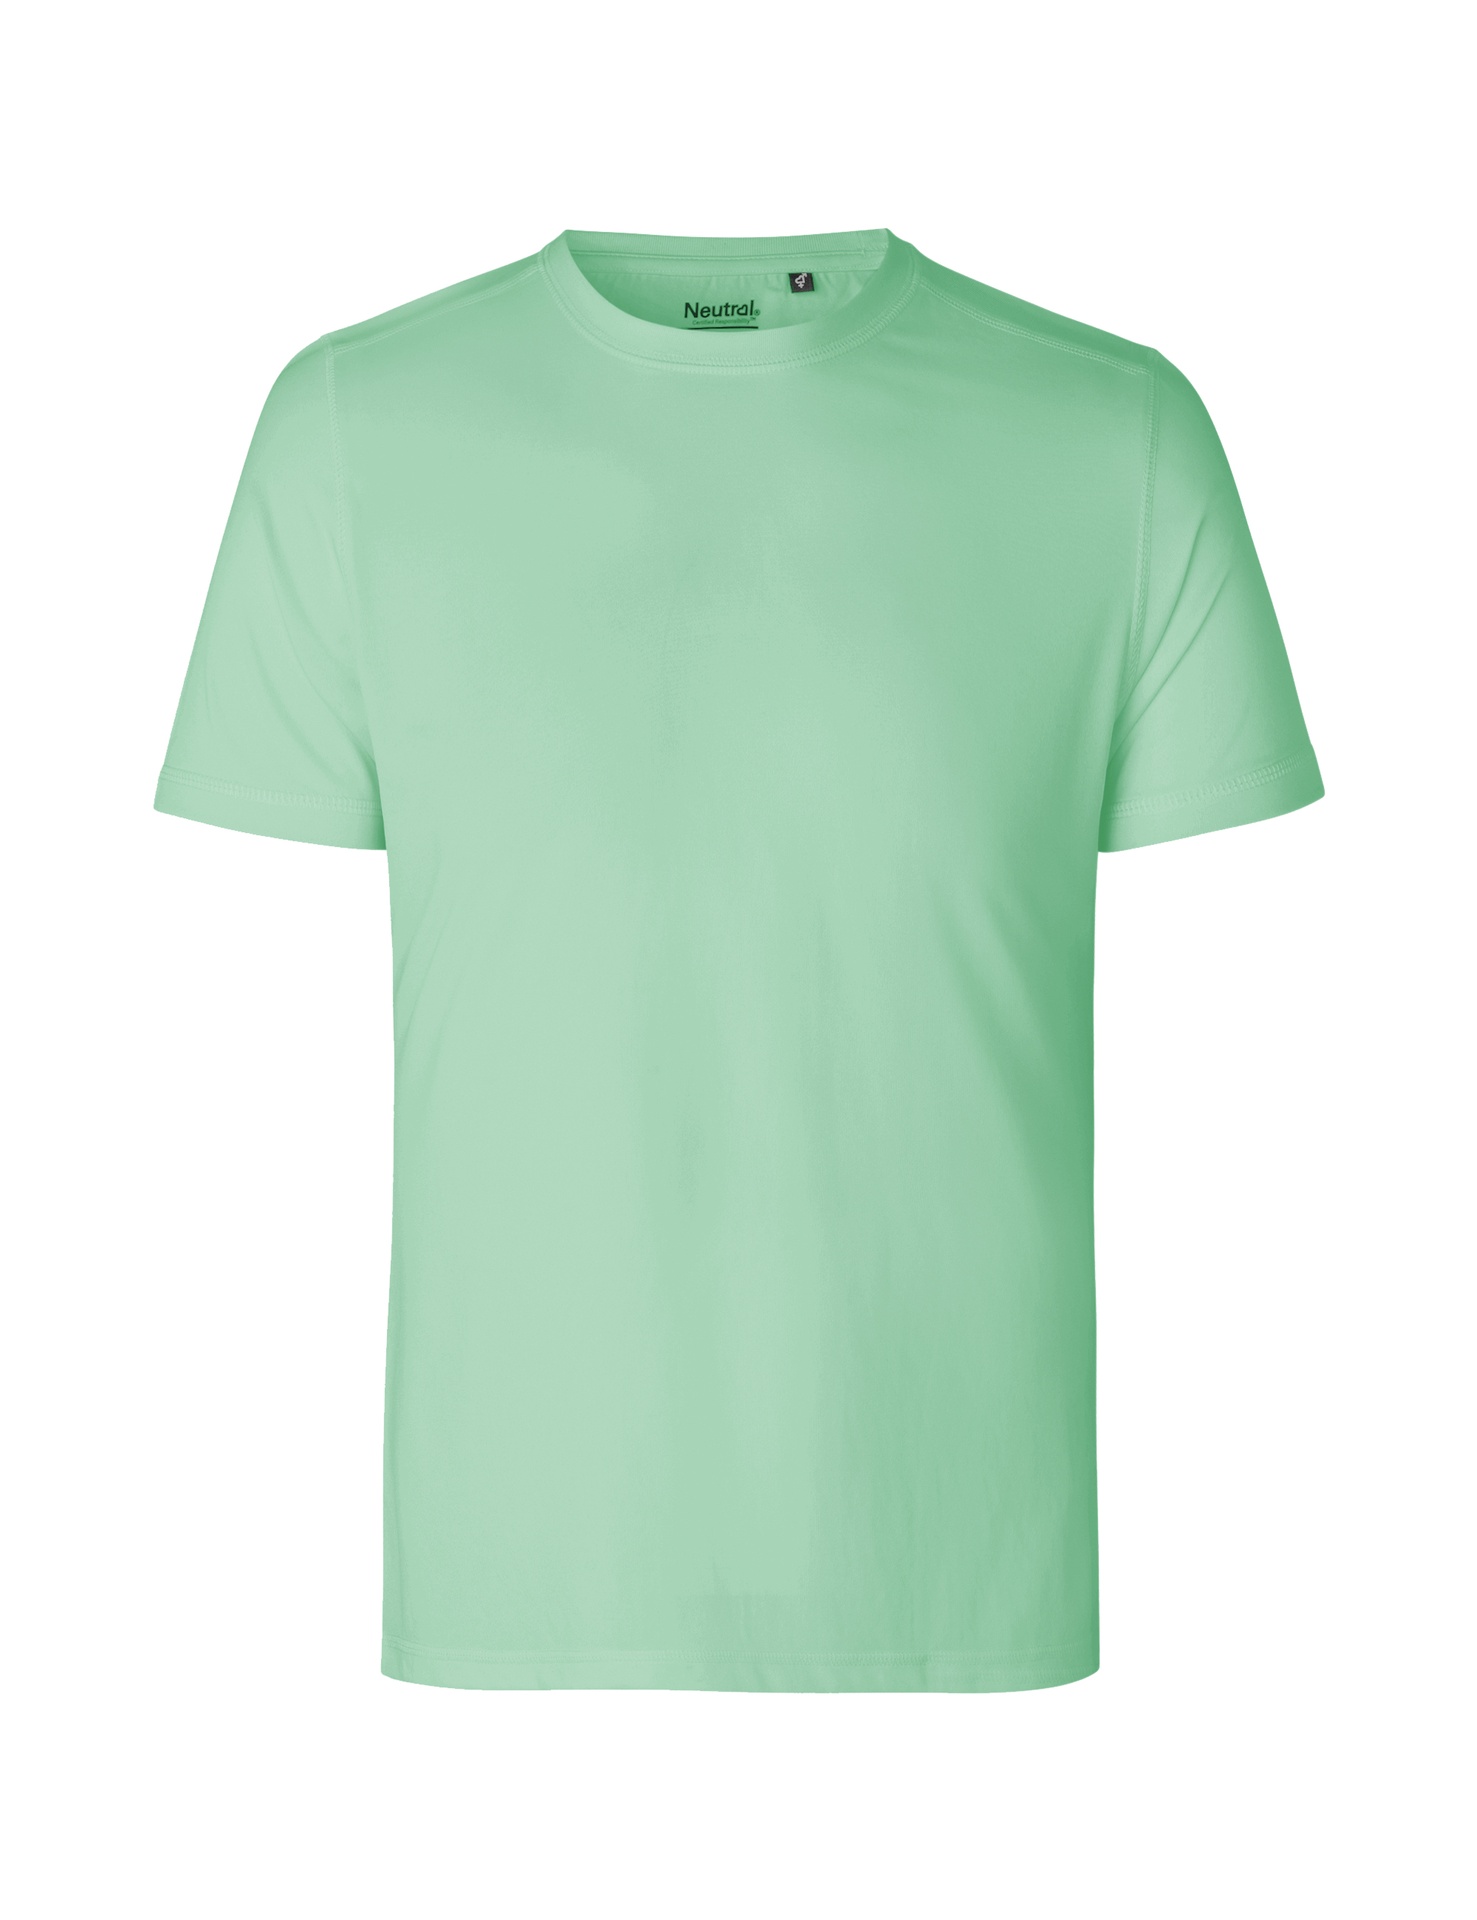 [PR/03798] Recycled Performance T-Shirt (Dusty Mint 40, L)